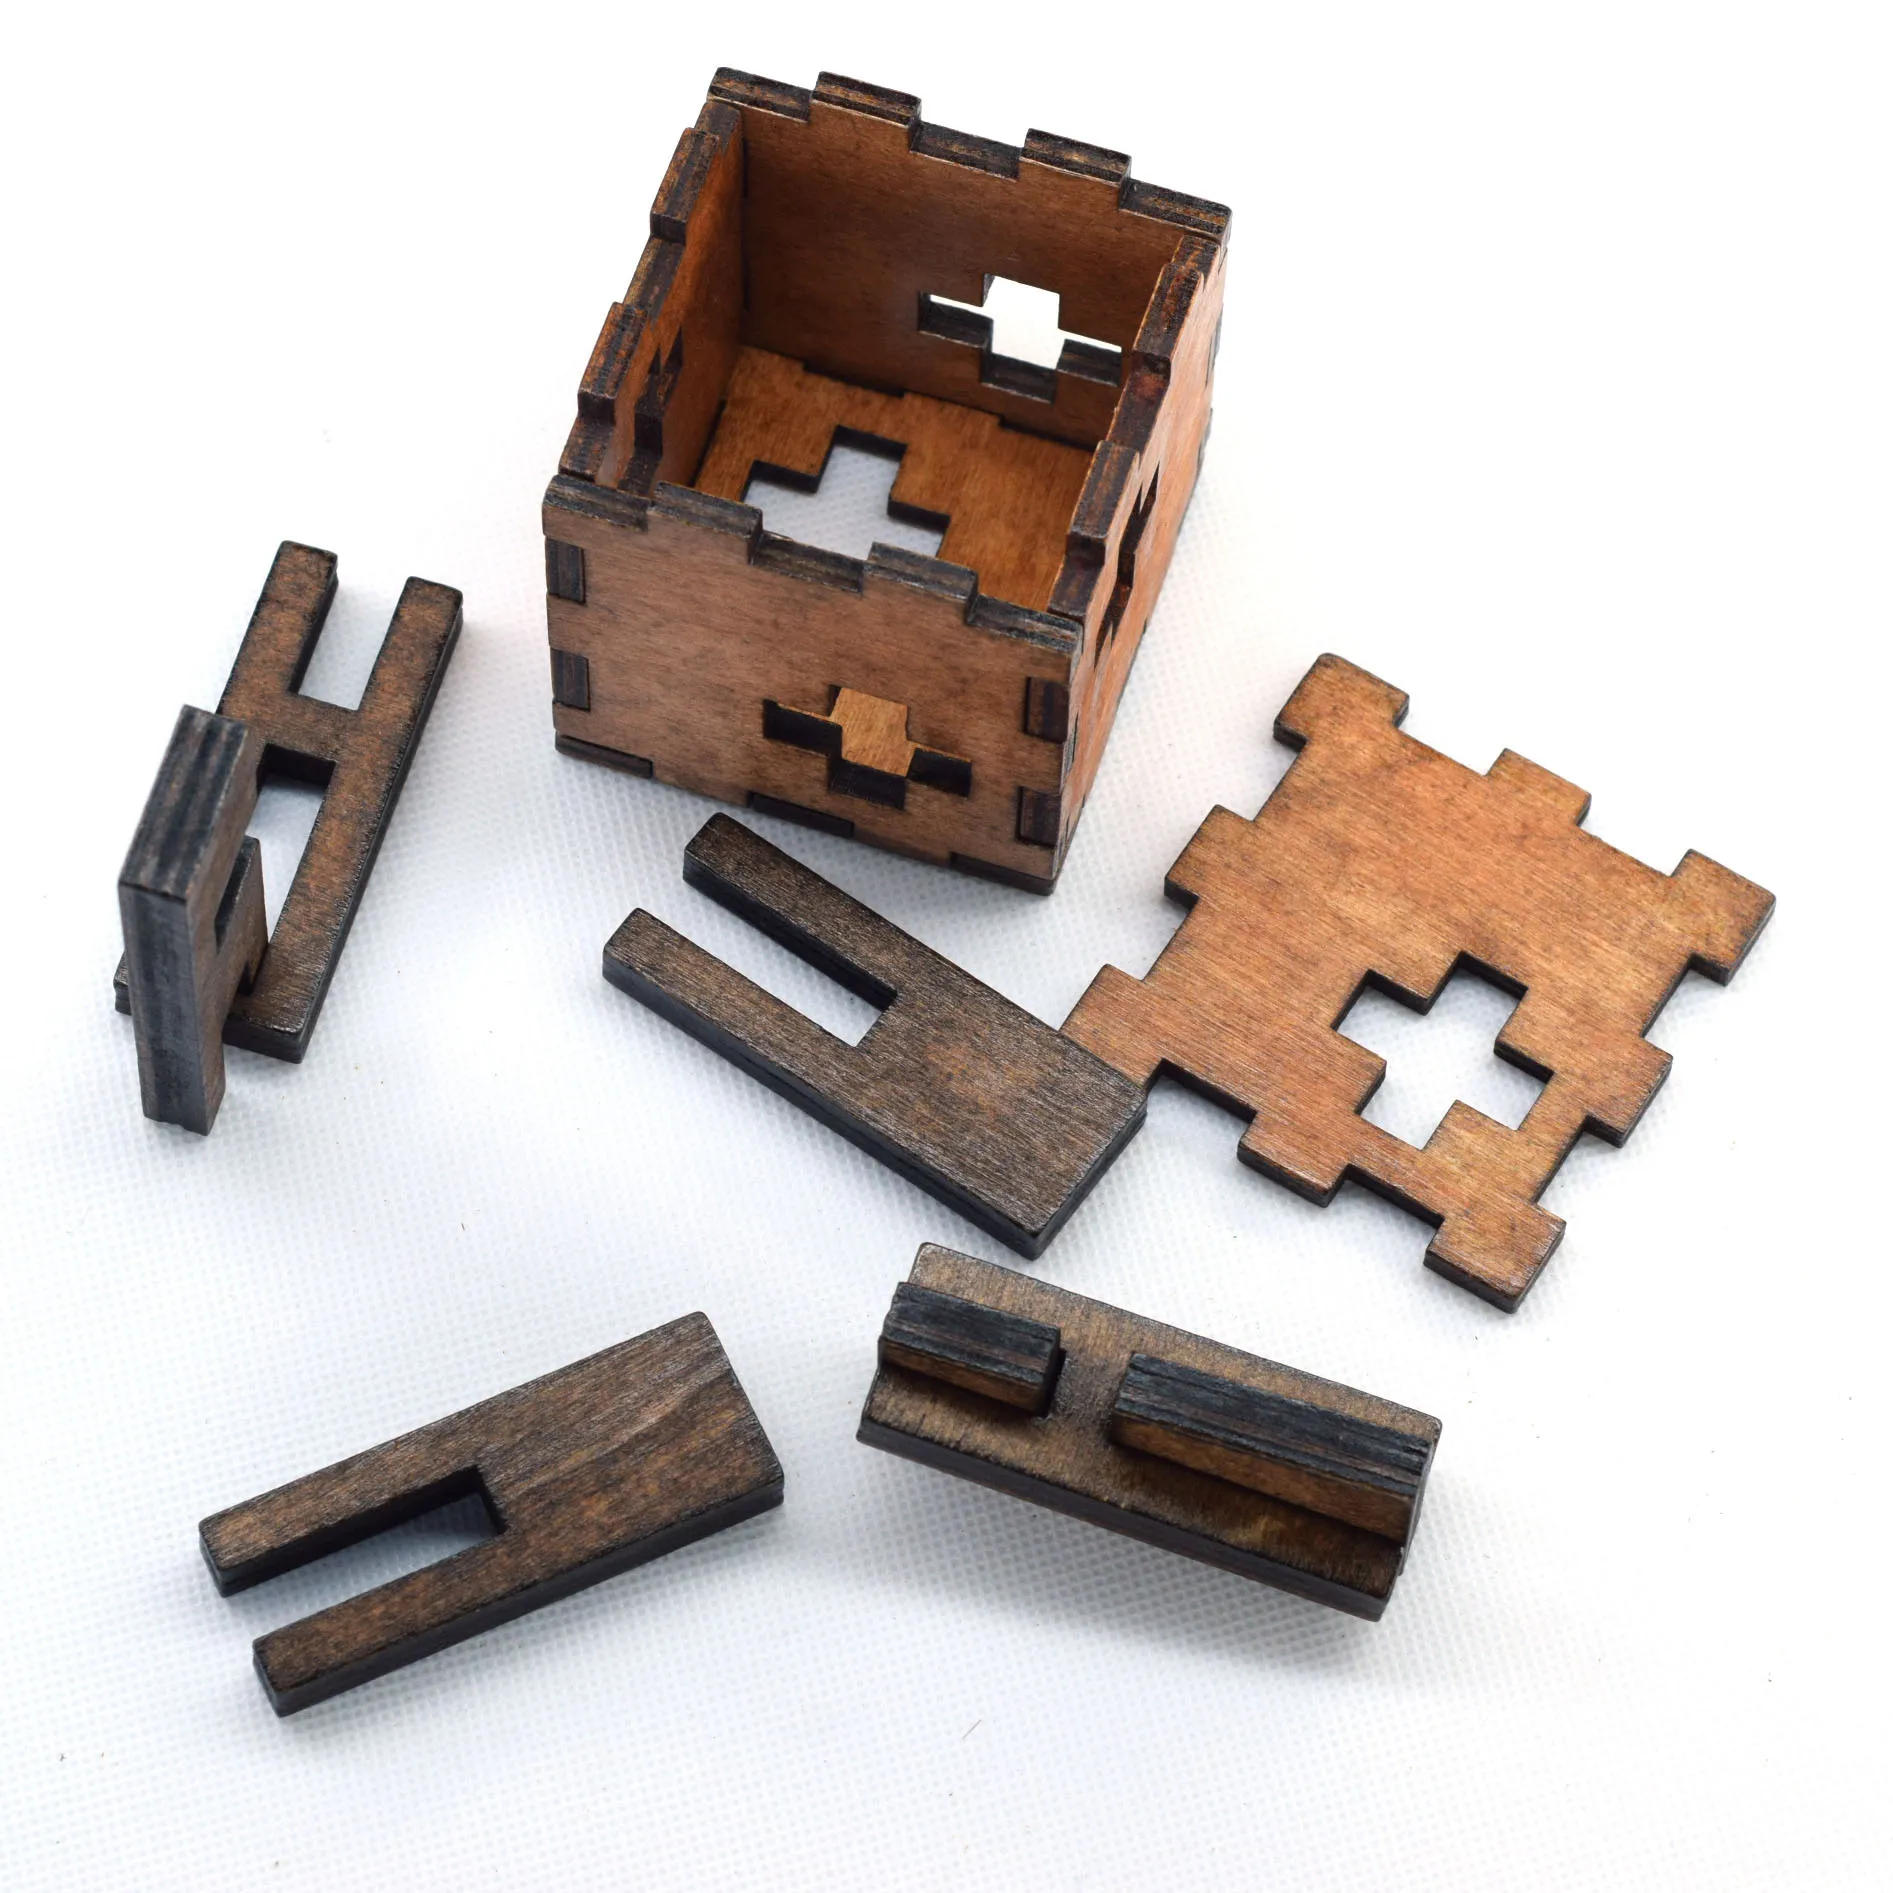 Switzerland cube Wooden Swiss Secret Puzzle Box wood brain teaser toy For Kids S 